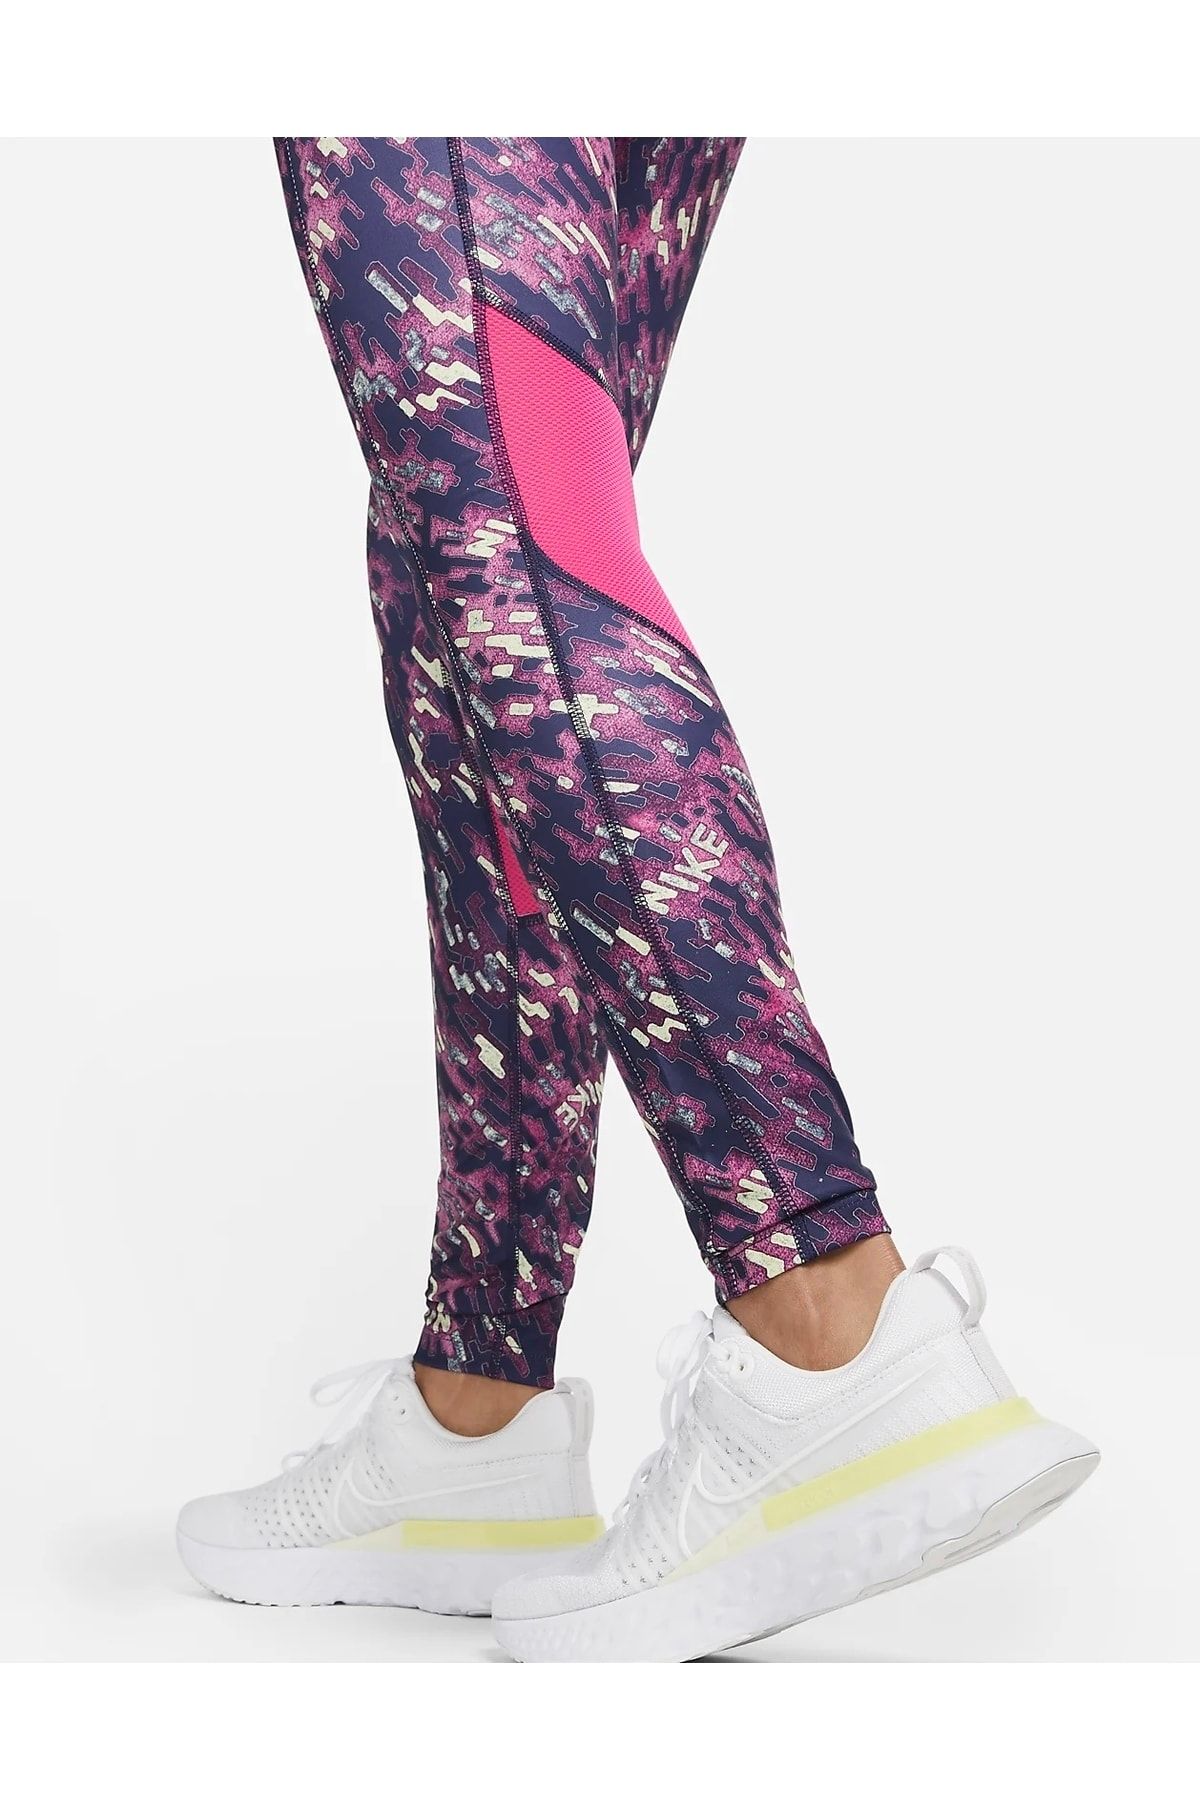 Nike Dri-FIT Epic Fast Women s Mid-Rise Running Leggings